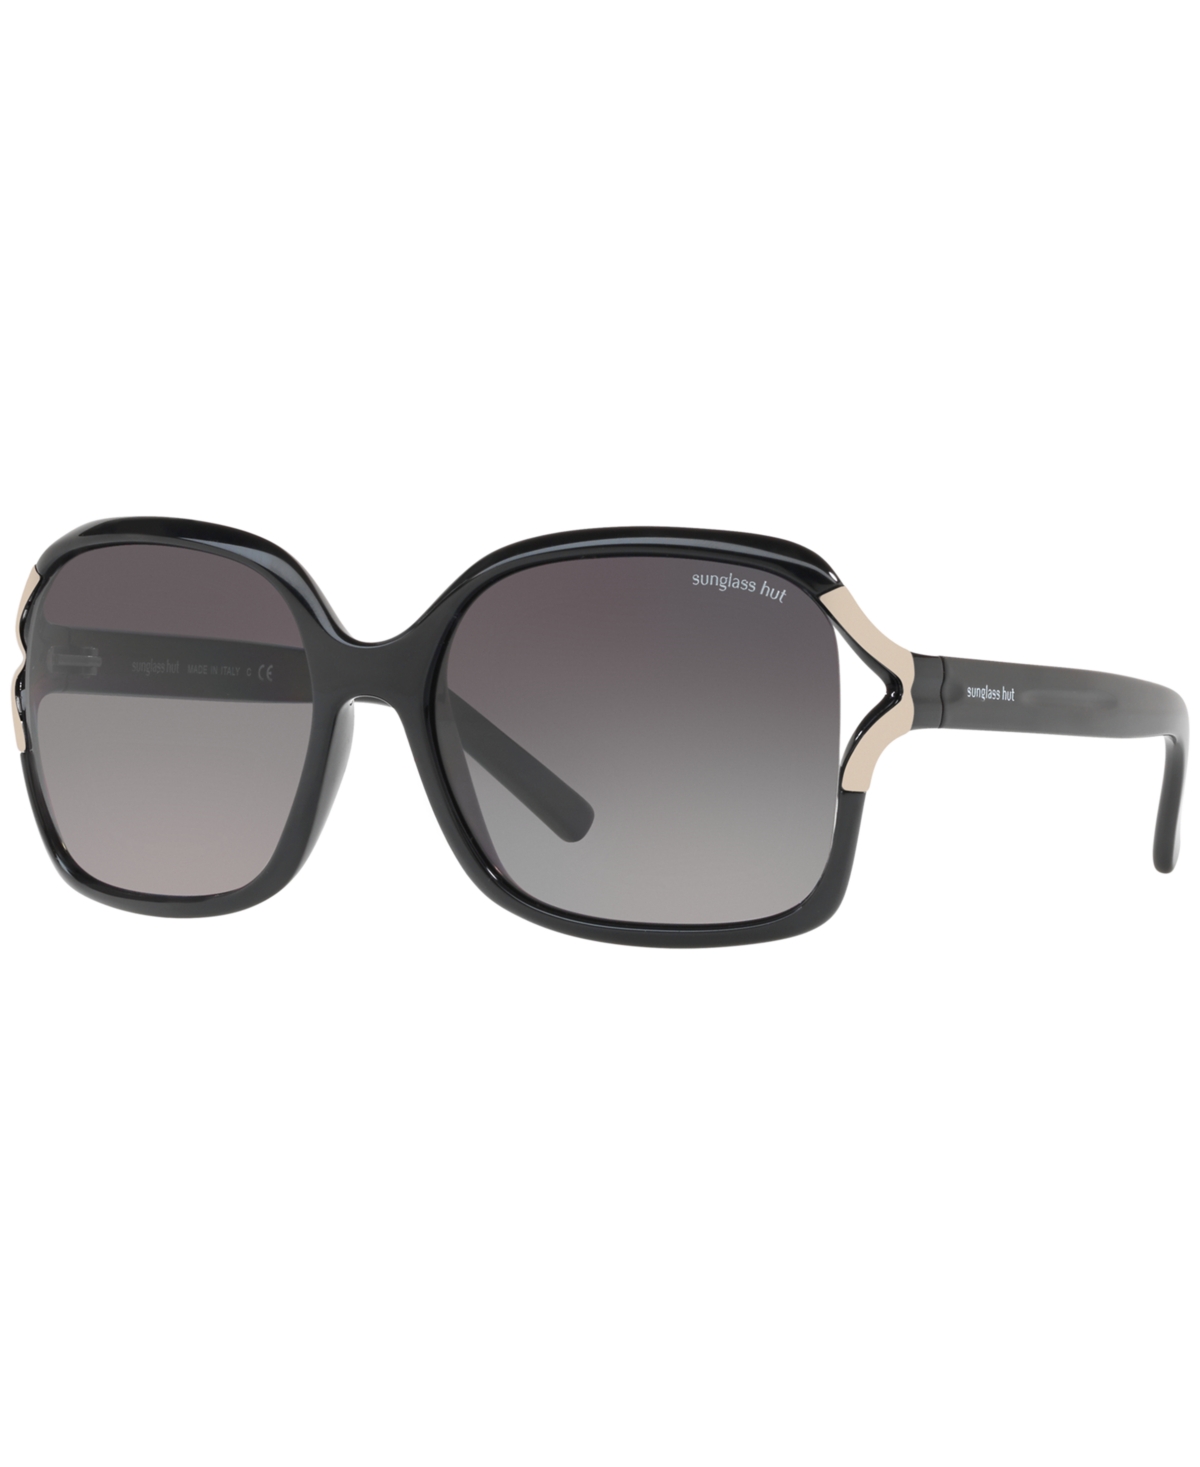 Sunglass Hut Collection Polarized Sunglasses, Hu2002 In Black,grey Gradient Polarized